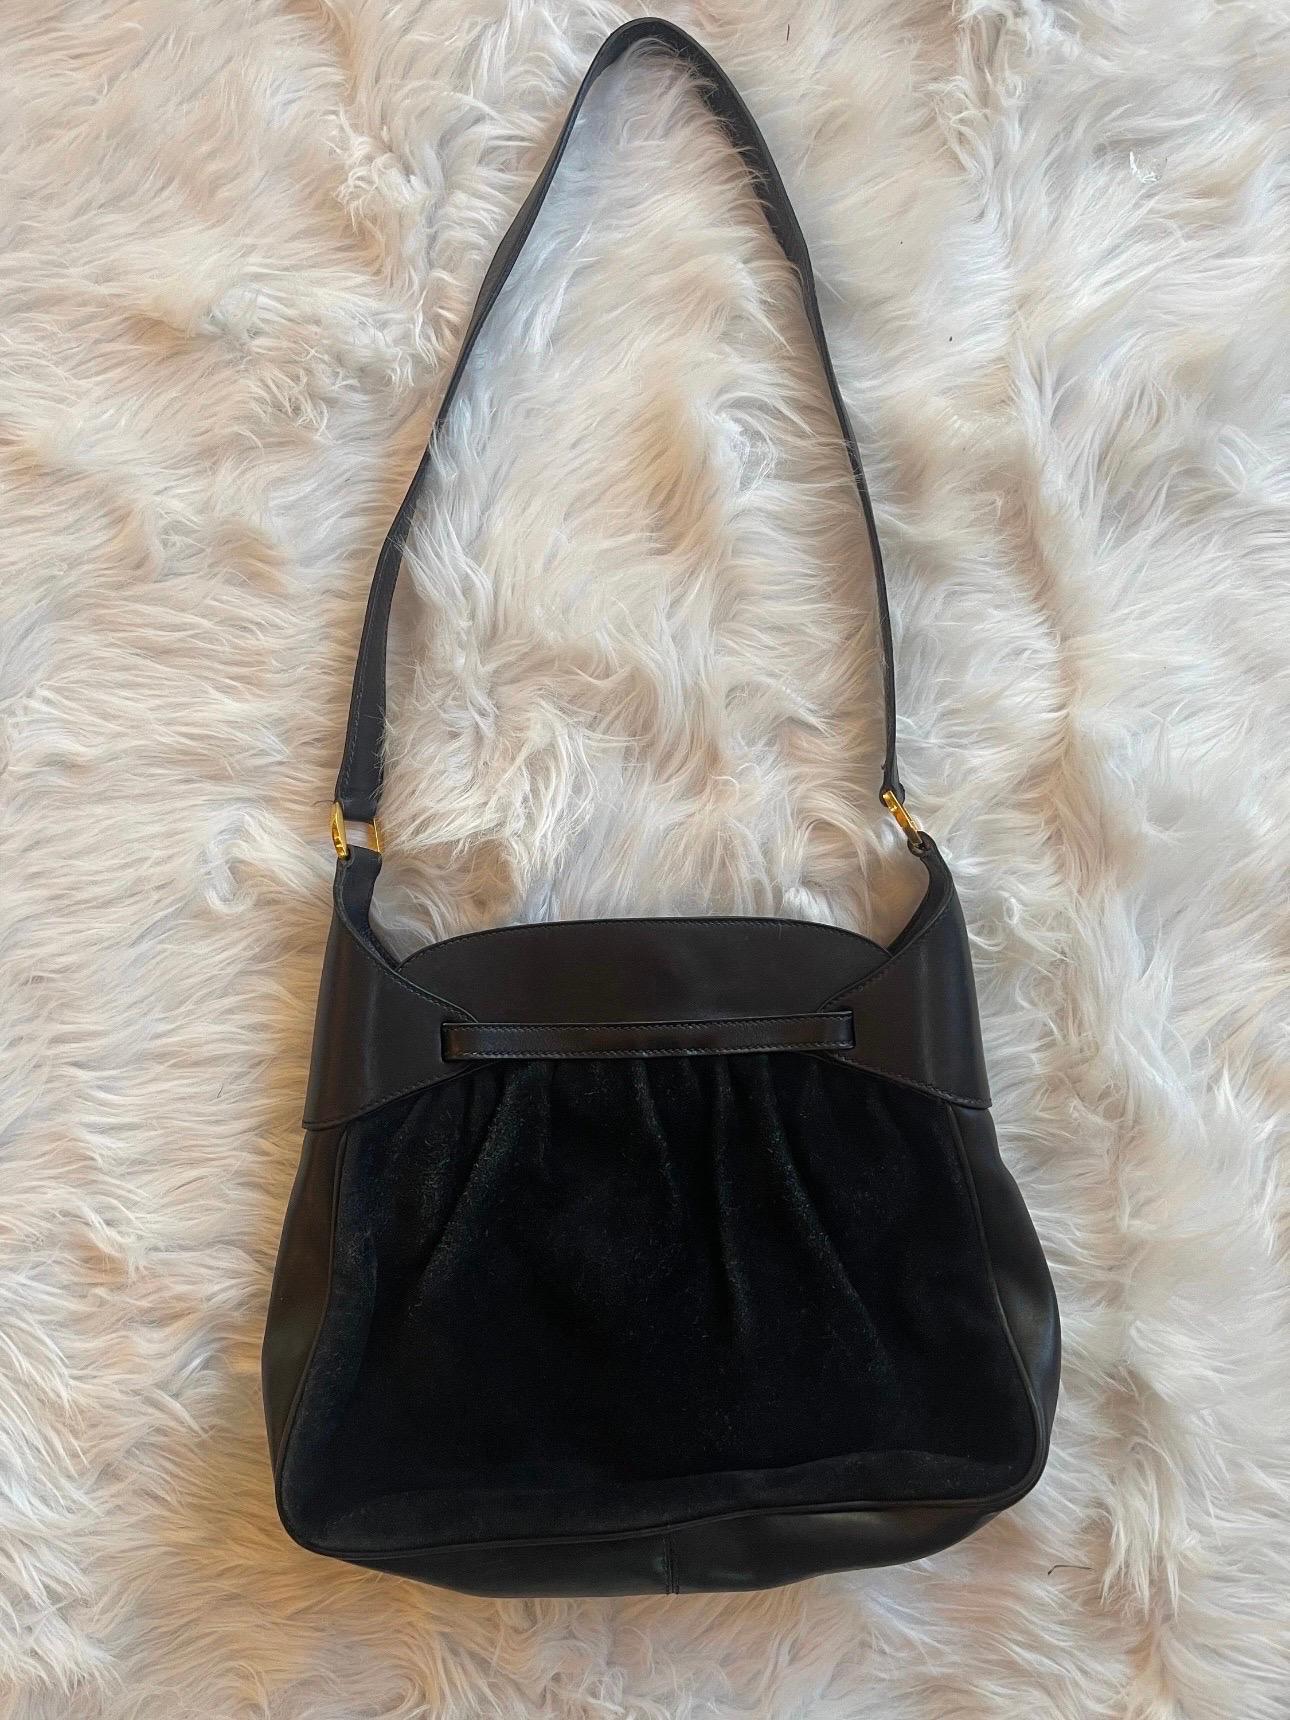 Vintage GUCCI Black Suede Leather GG Gold tone logo Hobo Bag Crossbody Purse Bag For Sale 1